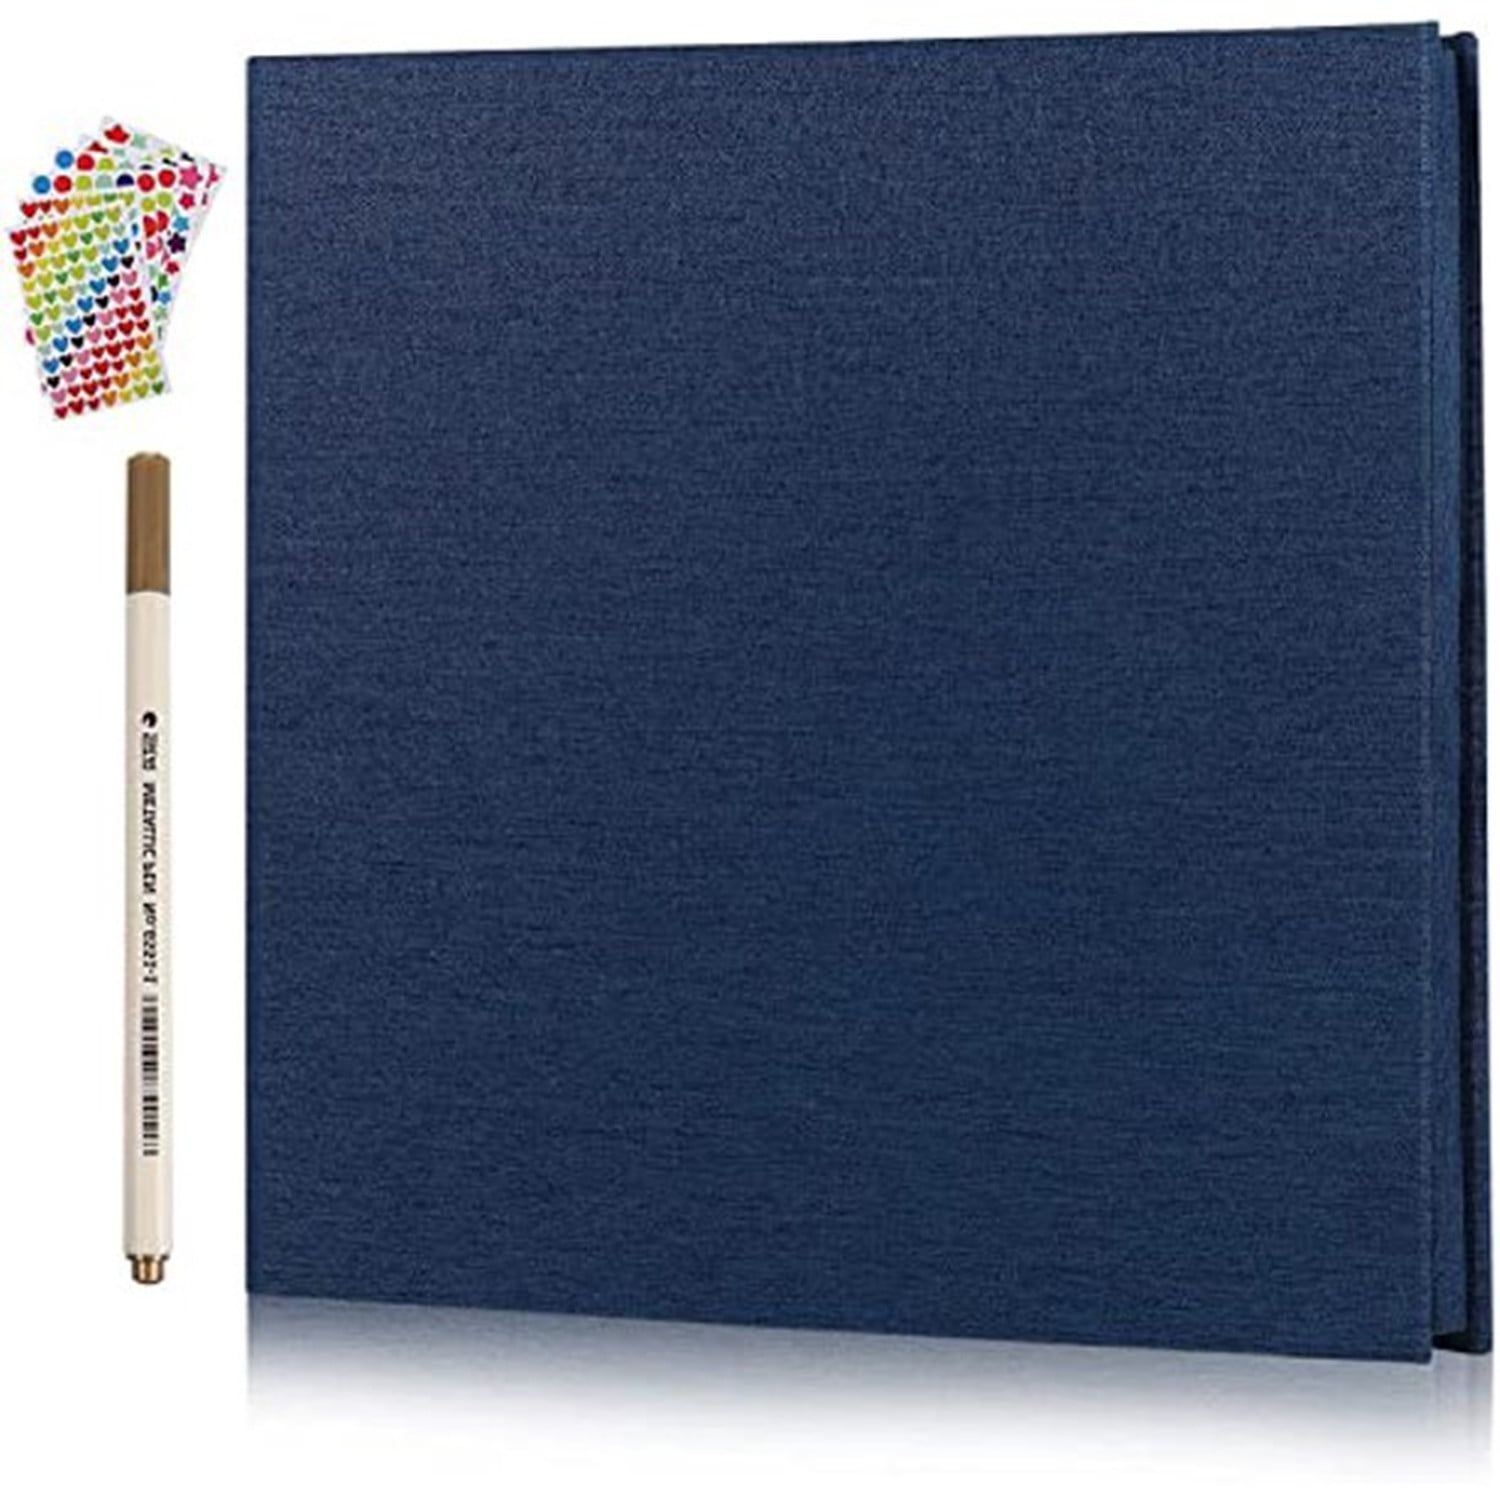 Scrapbook Album Kit Blue Navy - Gift Set